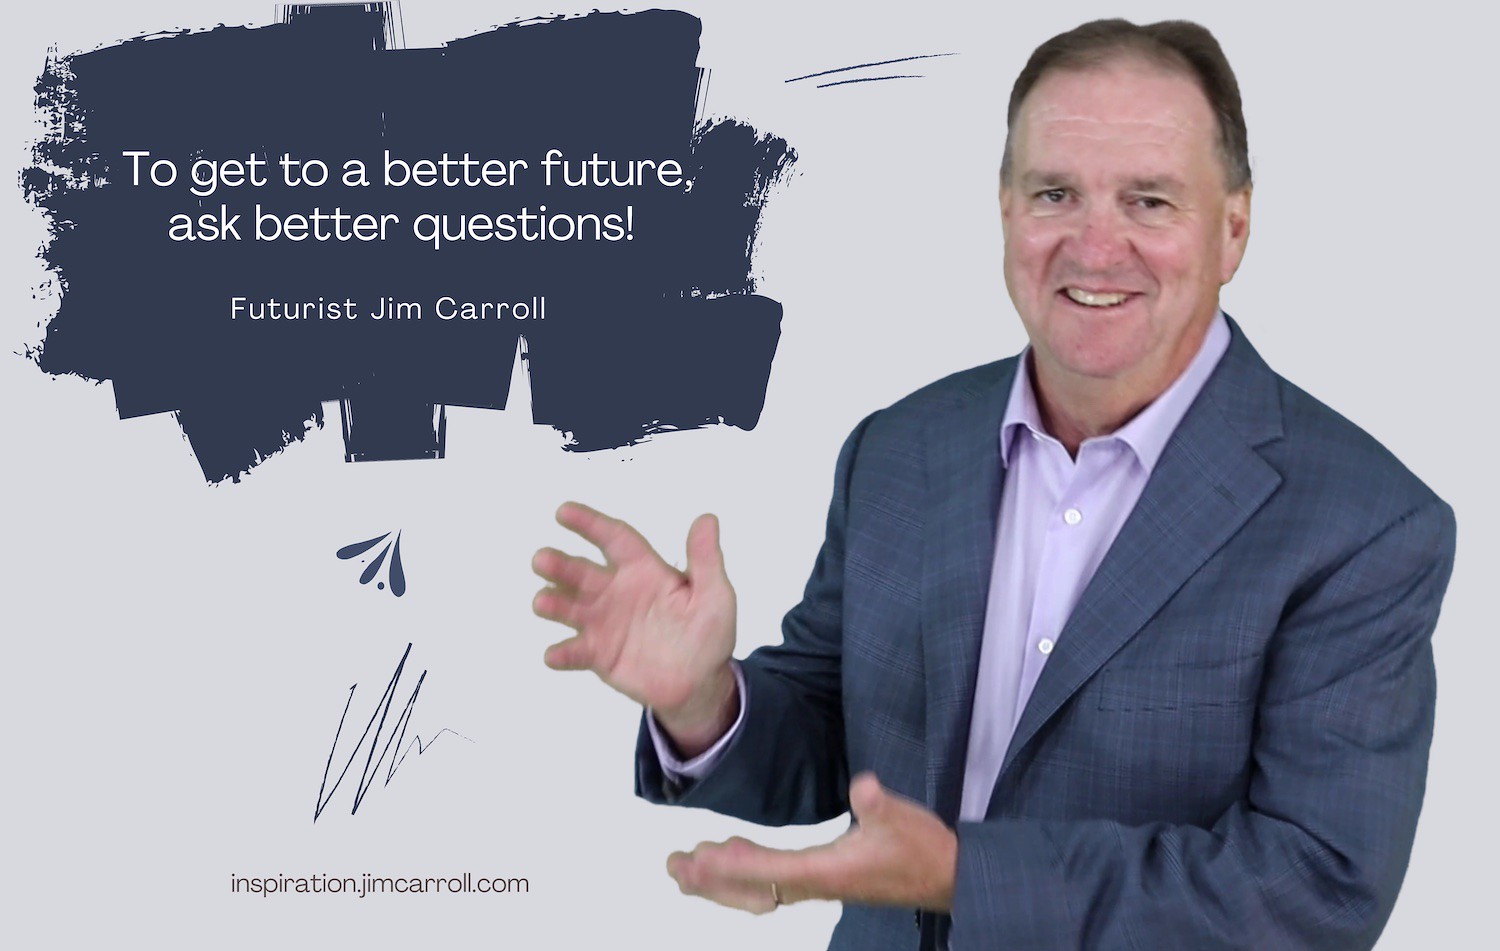 "To get to a better future, ask better questions!" - Futurist Jim CarrollBetterFuttureBetterQuestions